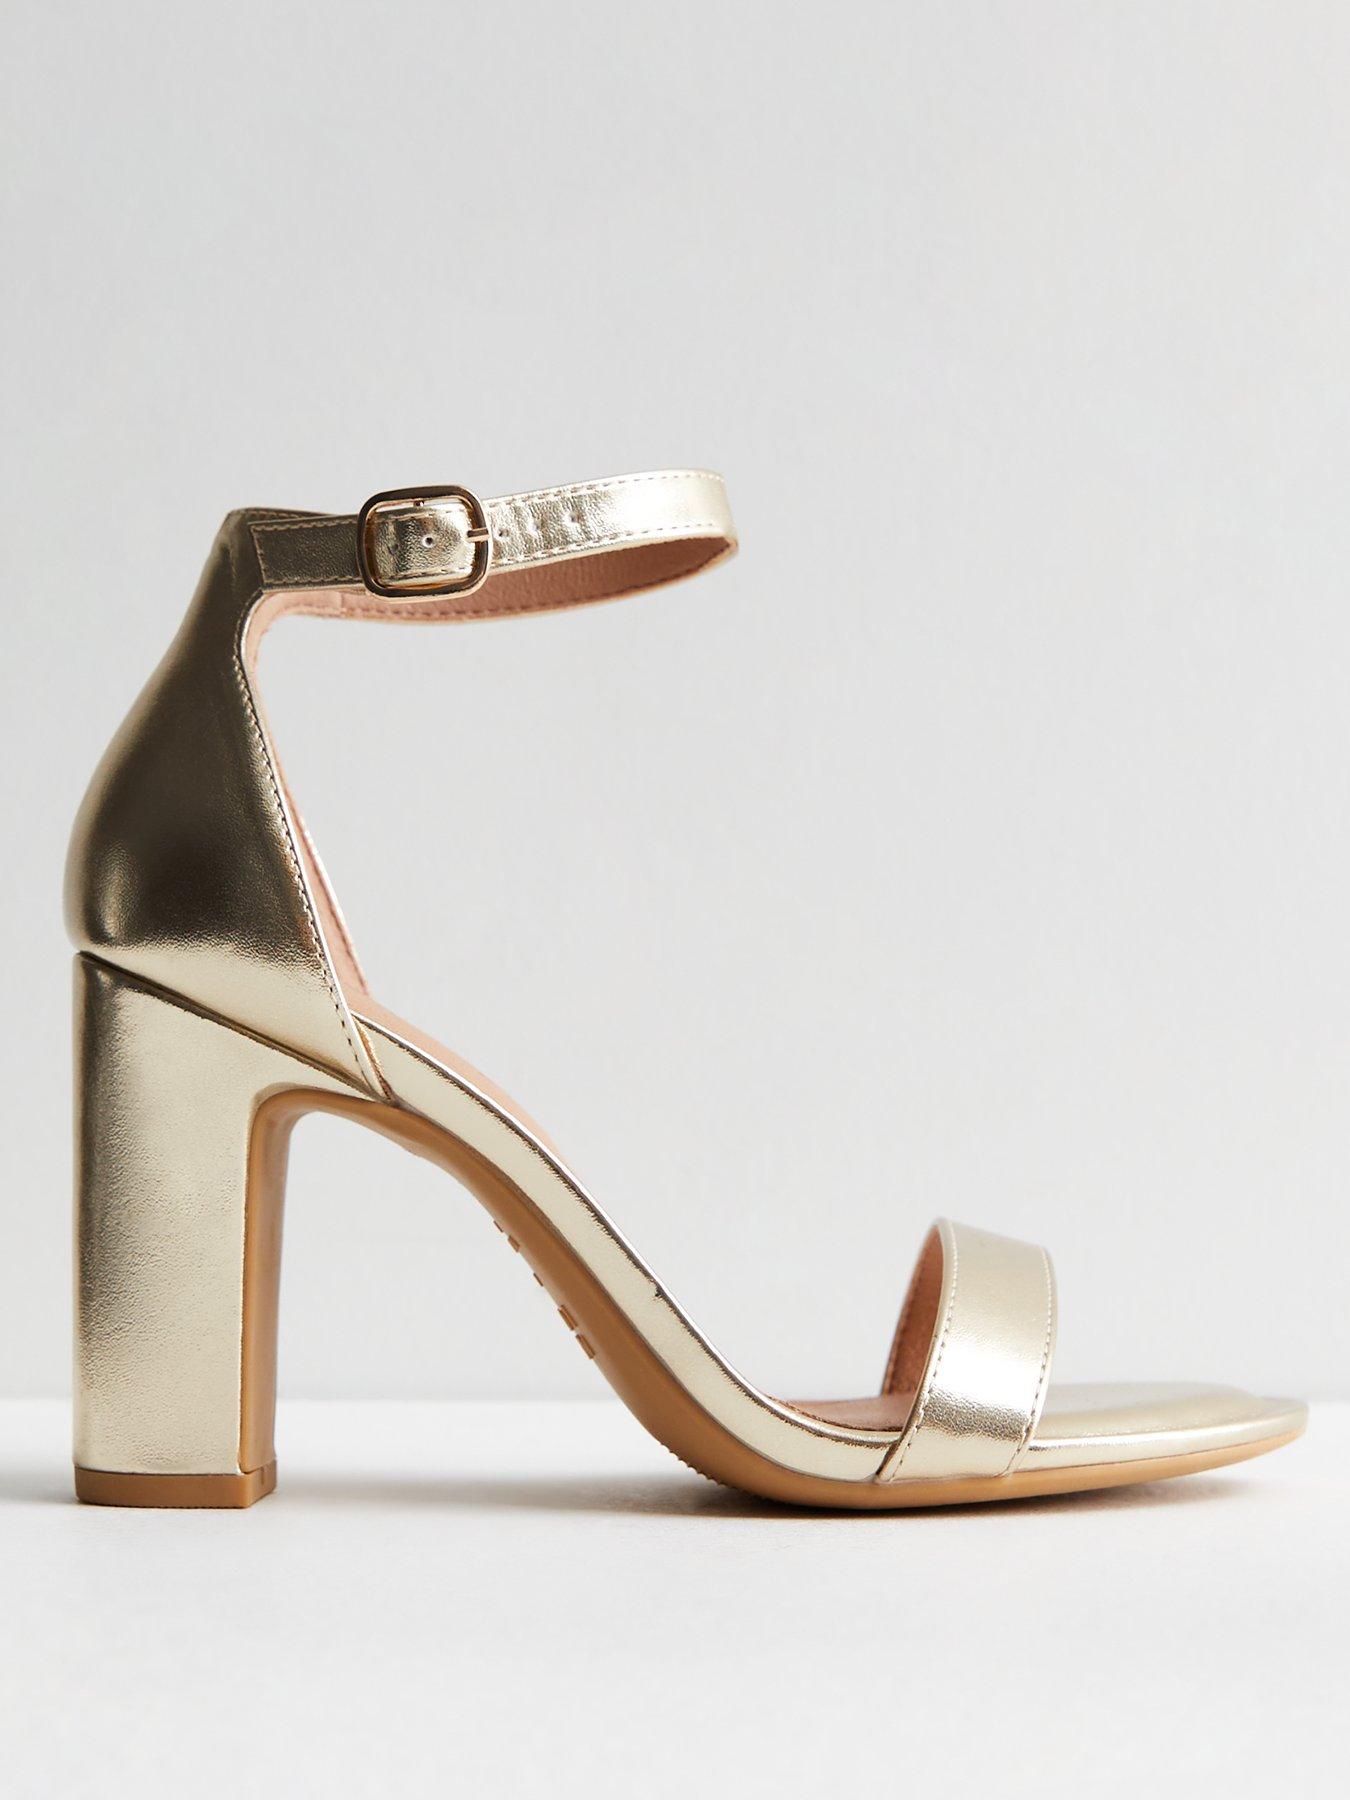 New Look Ladies Suede Peep Toe CHEAP Platform Stiletto Sandals Heels SALE |  eBay